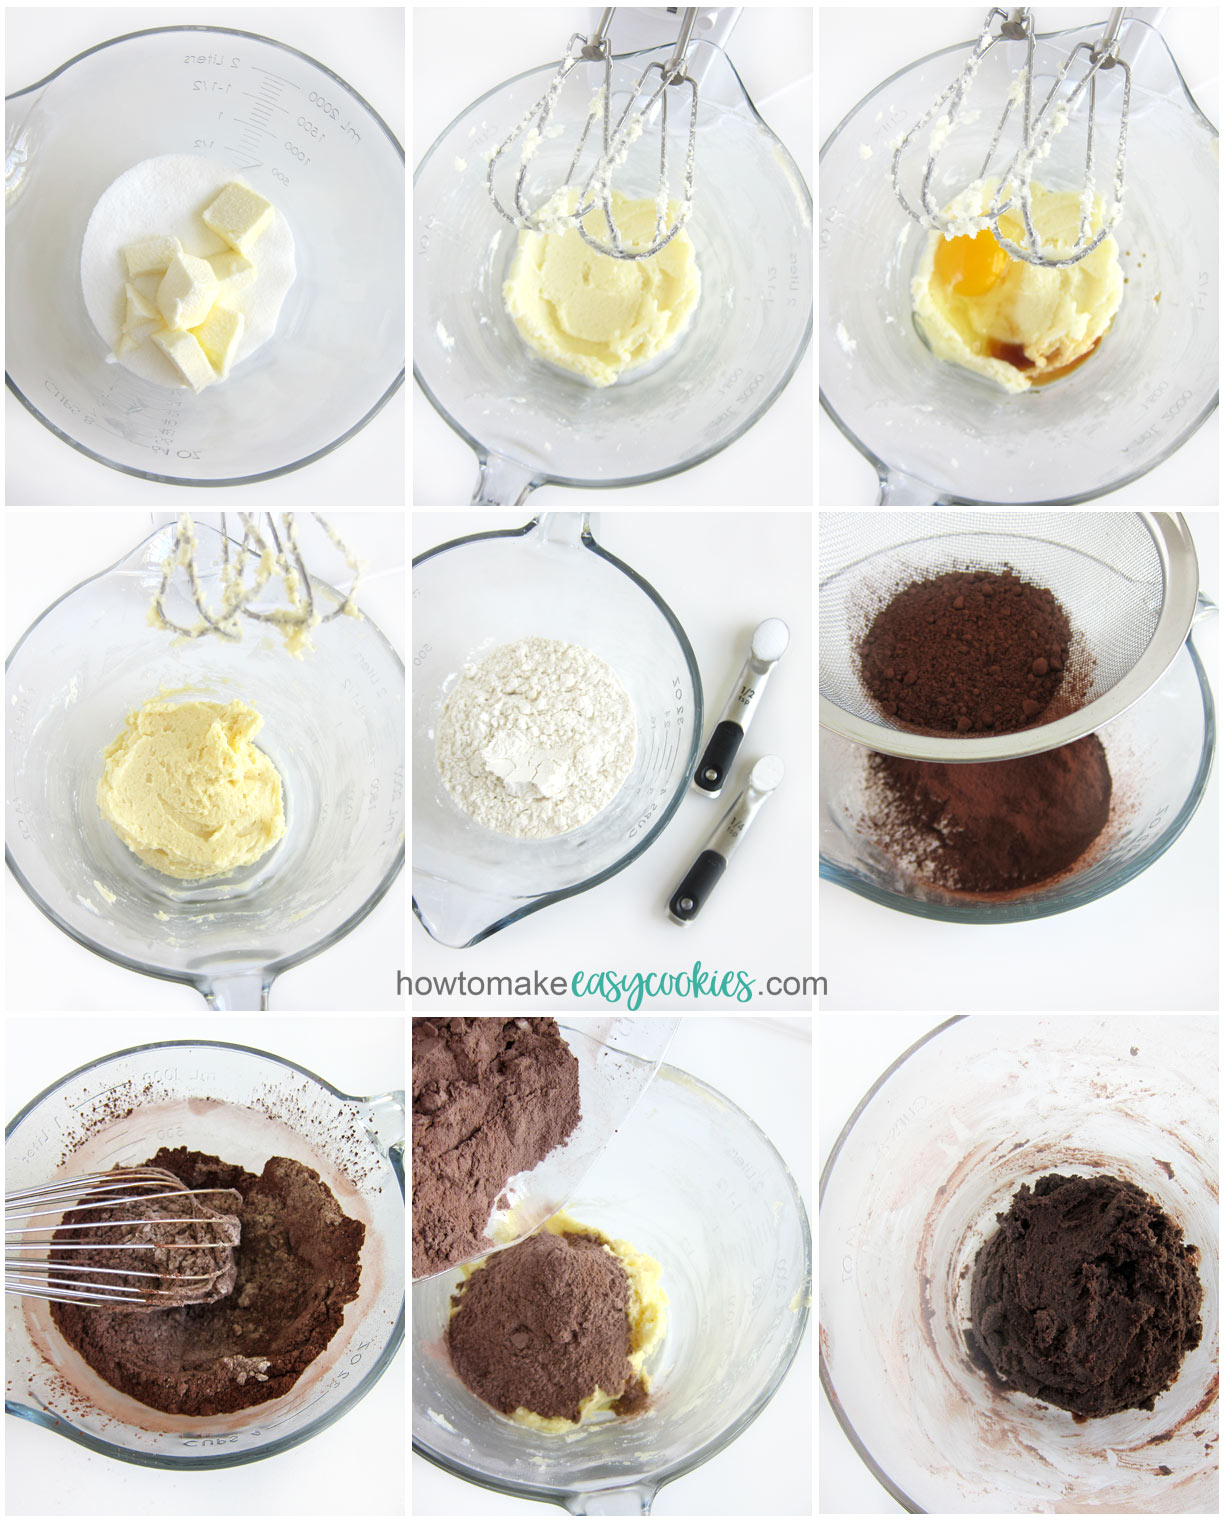 making chocolate cookie dough by blending butter, sugar, egg, vanilla, flour, baking powder, salt, and cocoa powder.